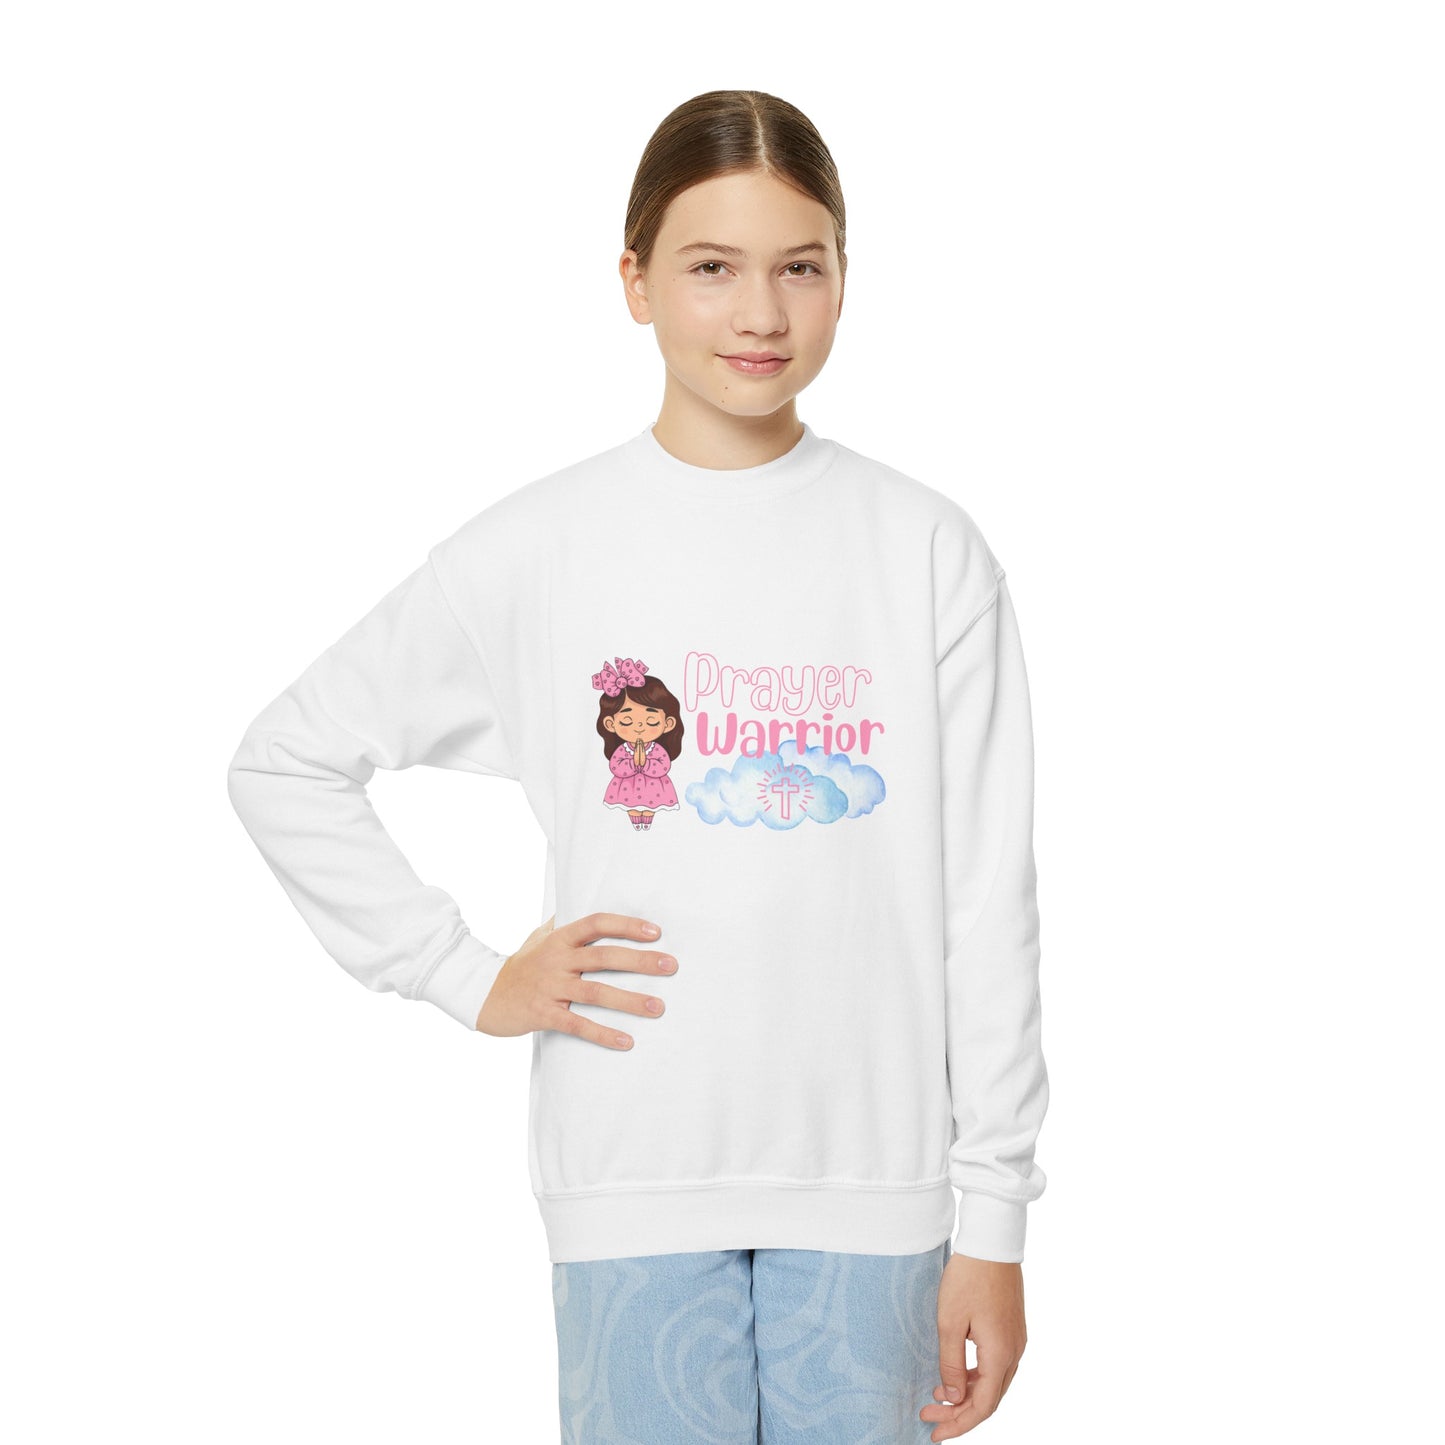 Prayer Warrior Girl's Sweatshirt